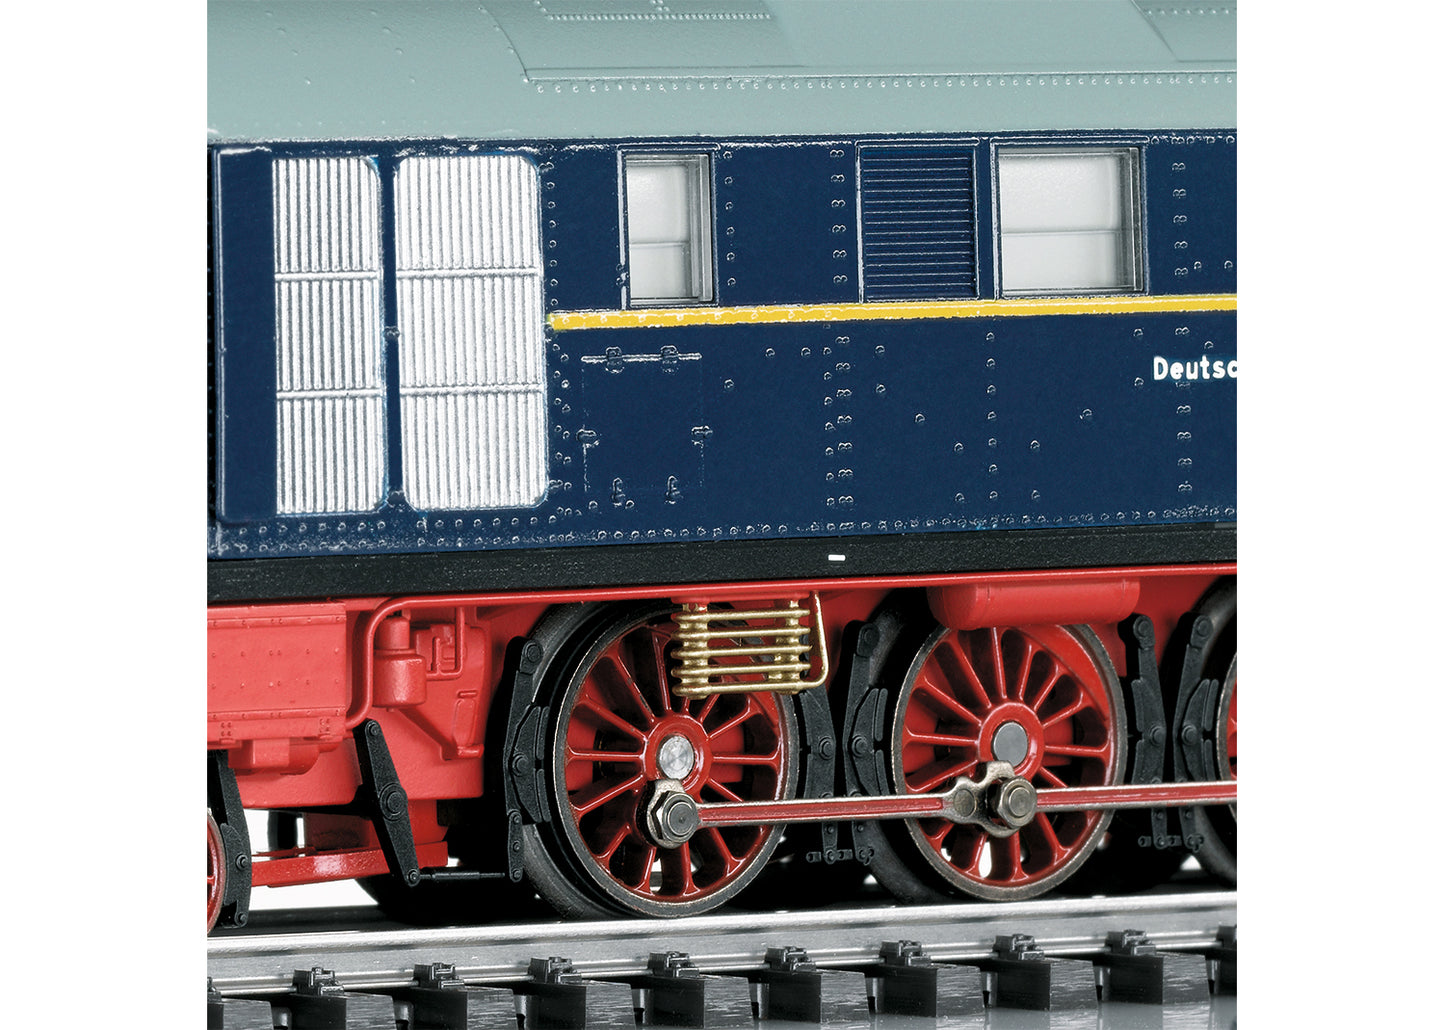 Trix 22404 - Class V 140 Diesel Locomotive